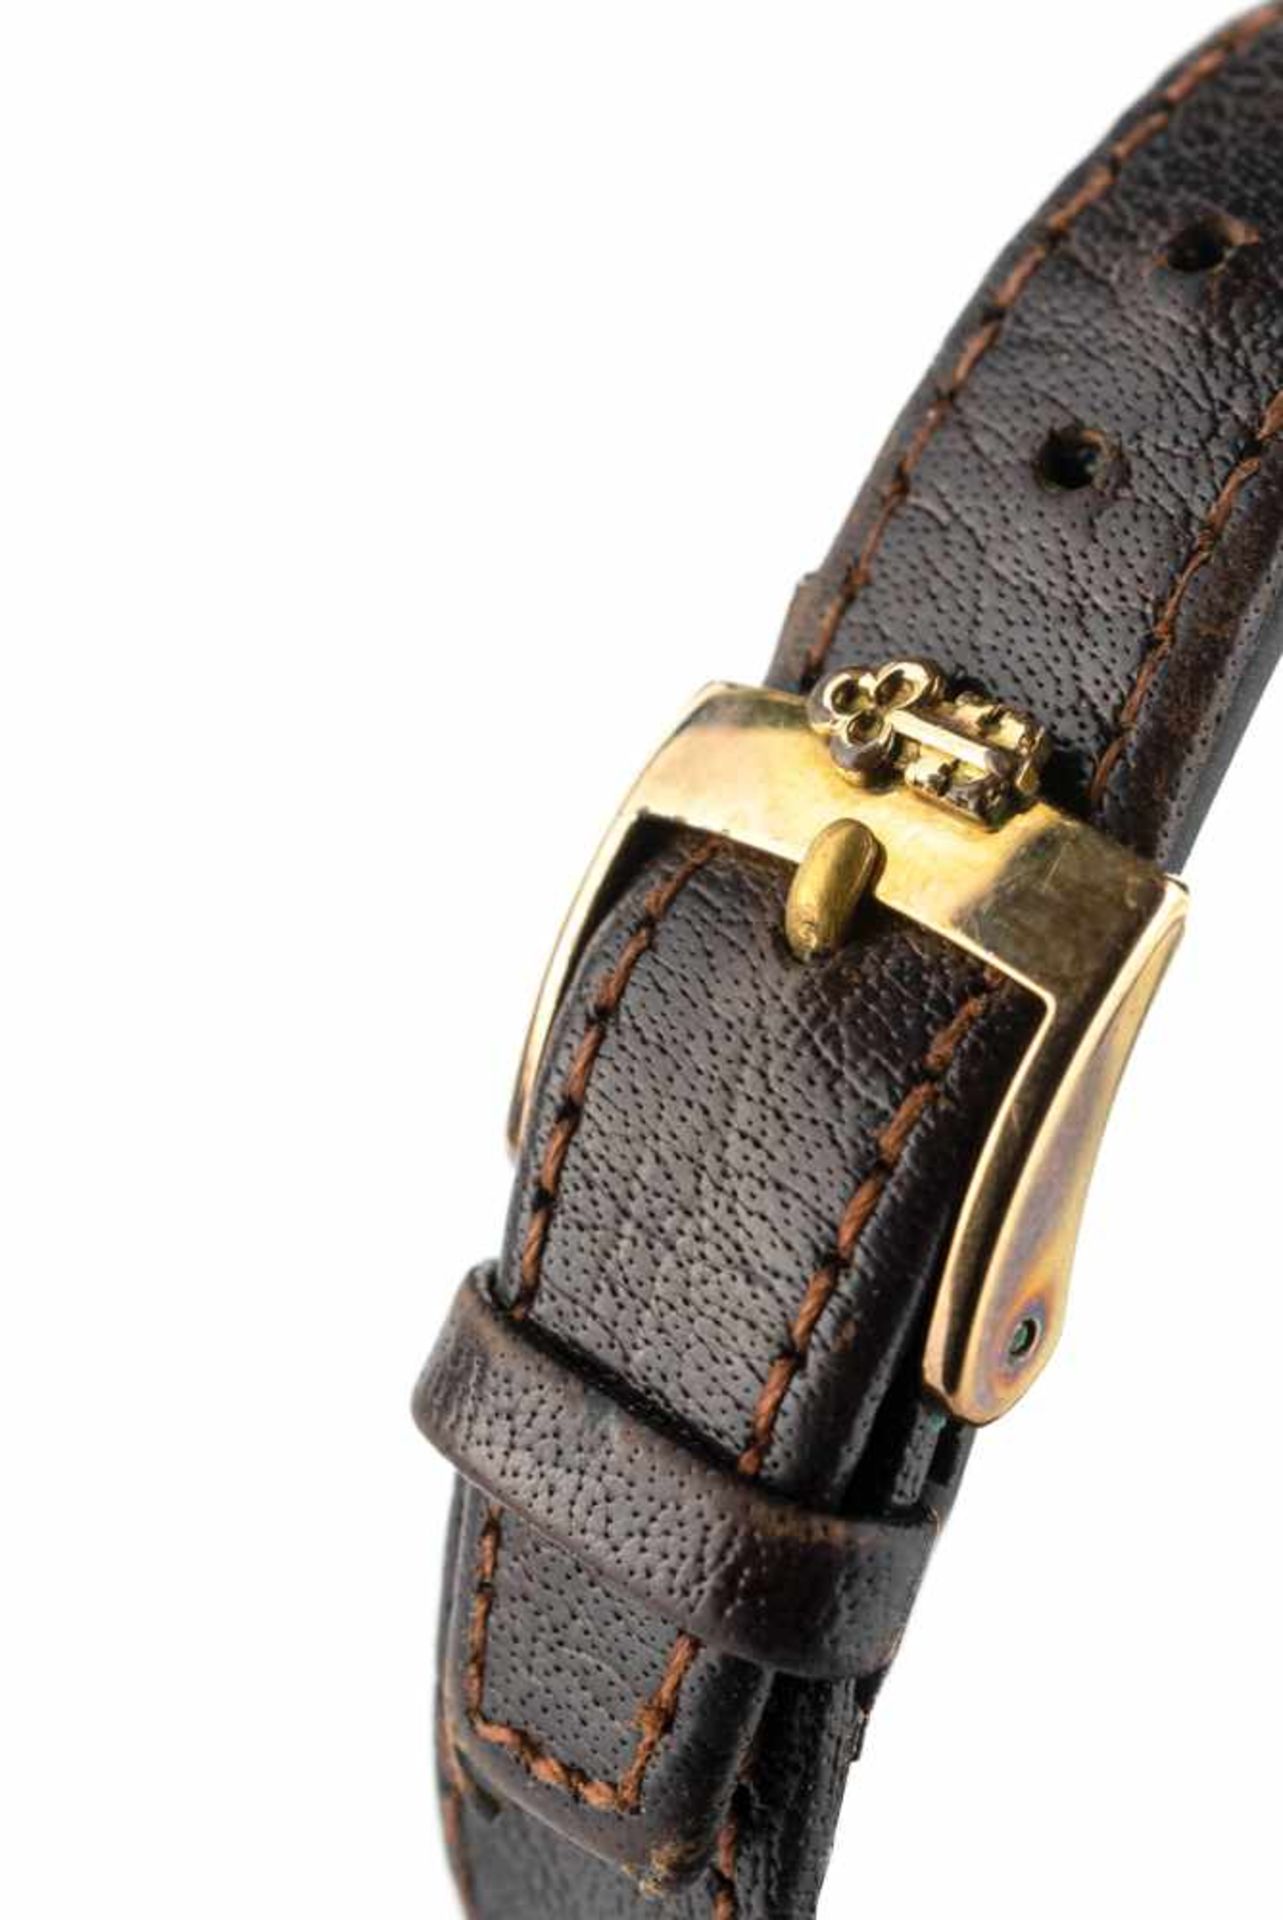 Corum Herrenarmbanduhr Handaufzug, Gehäuse 750 Gelbgold, punziert, Maße 33 mm x 28 mm, Armband - Bild 3 aus 3